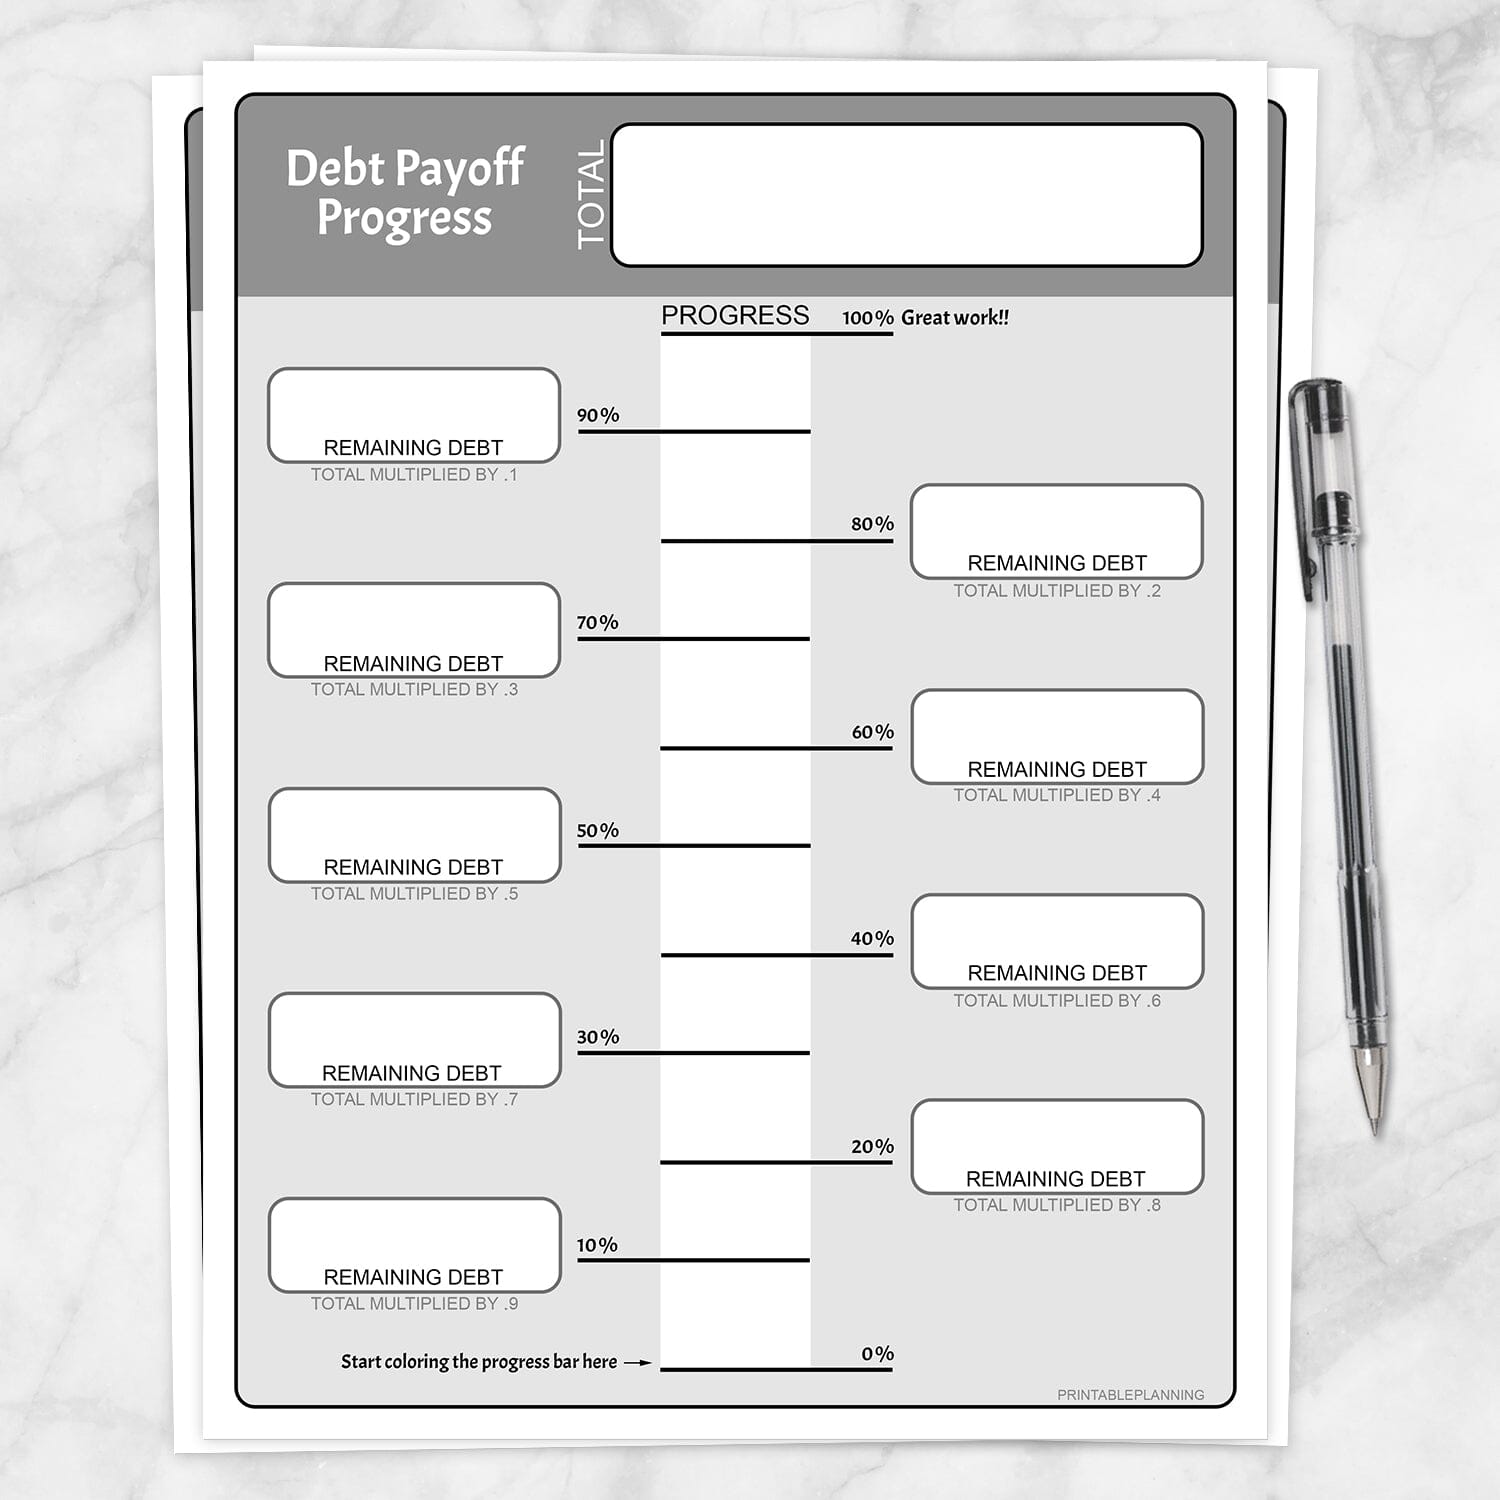 Printable Remaining Debt Payoff Progress Bar (descending) at Printable Planning.